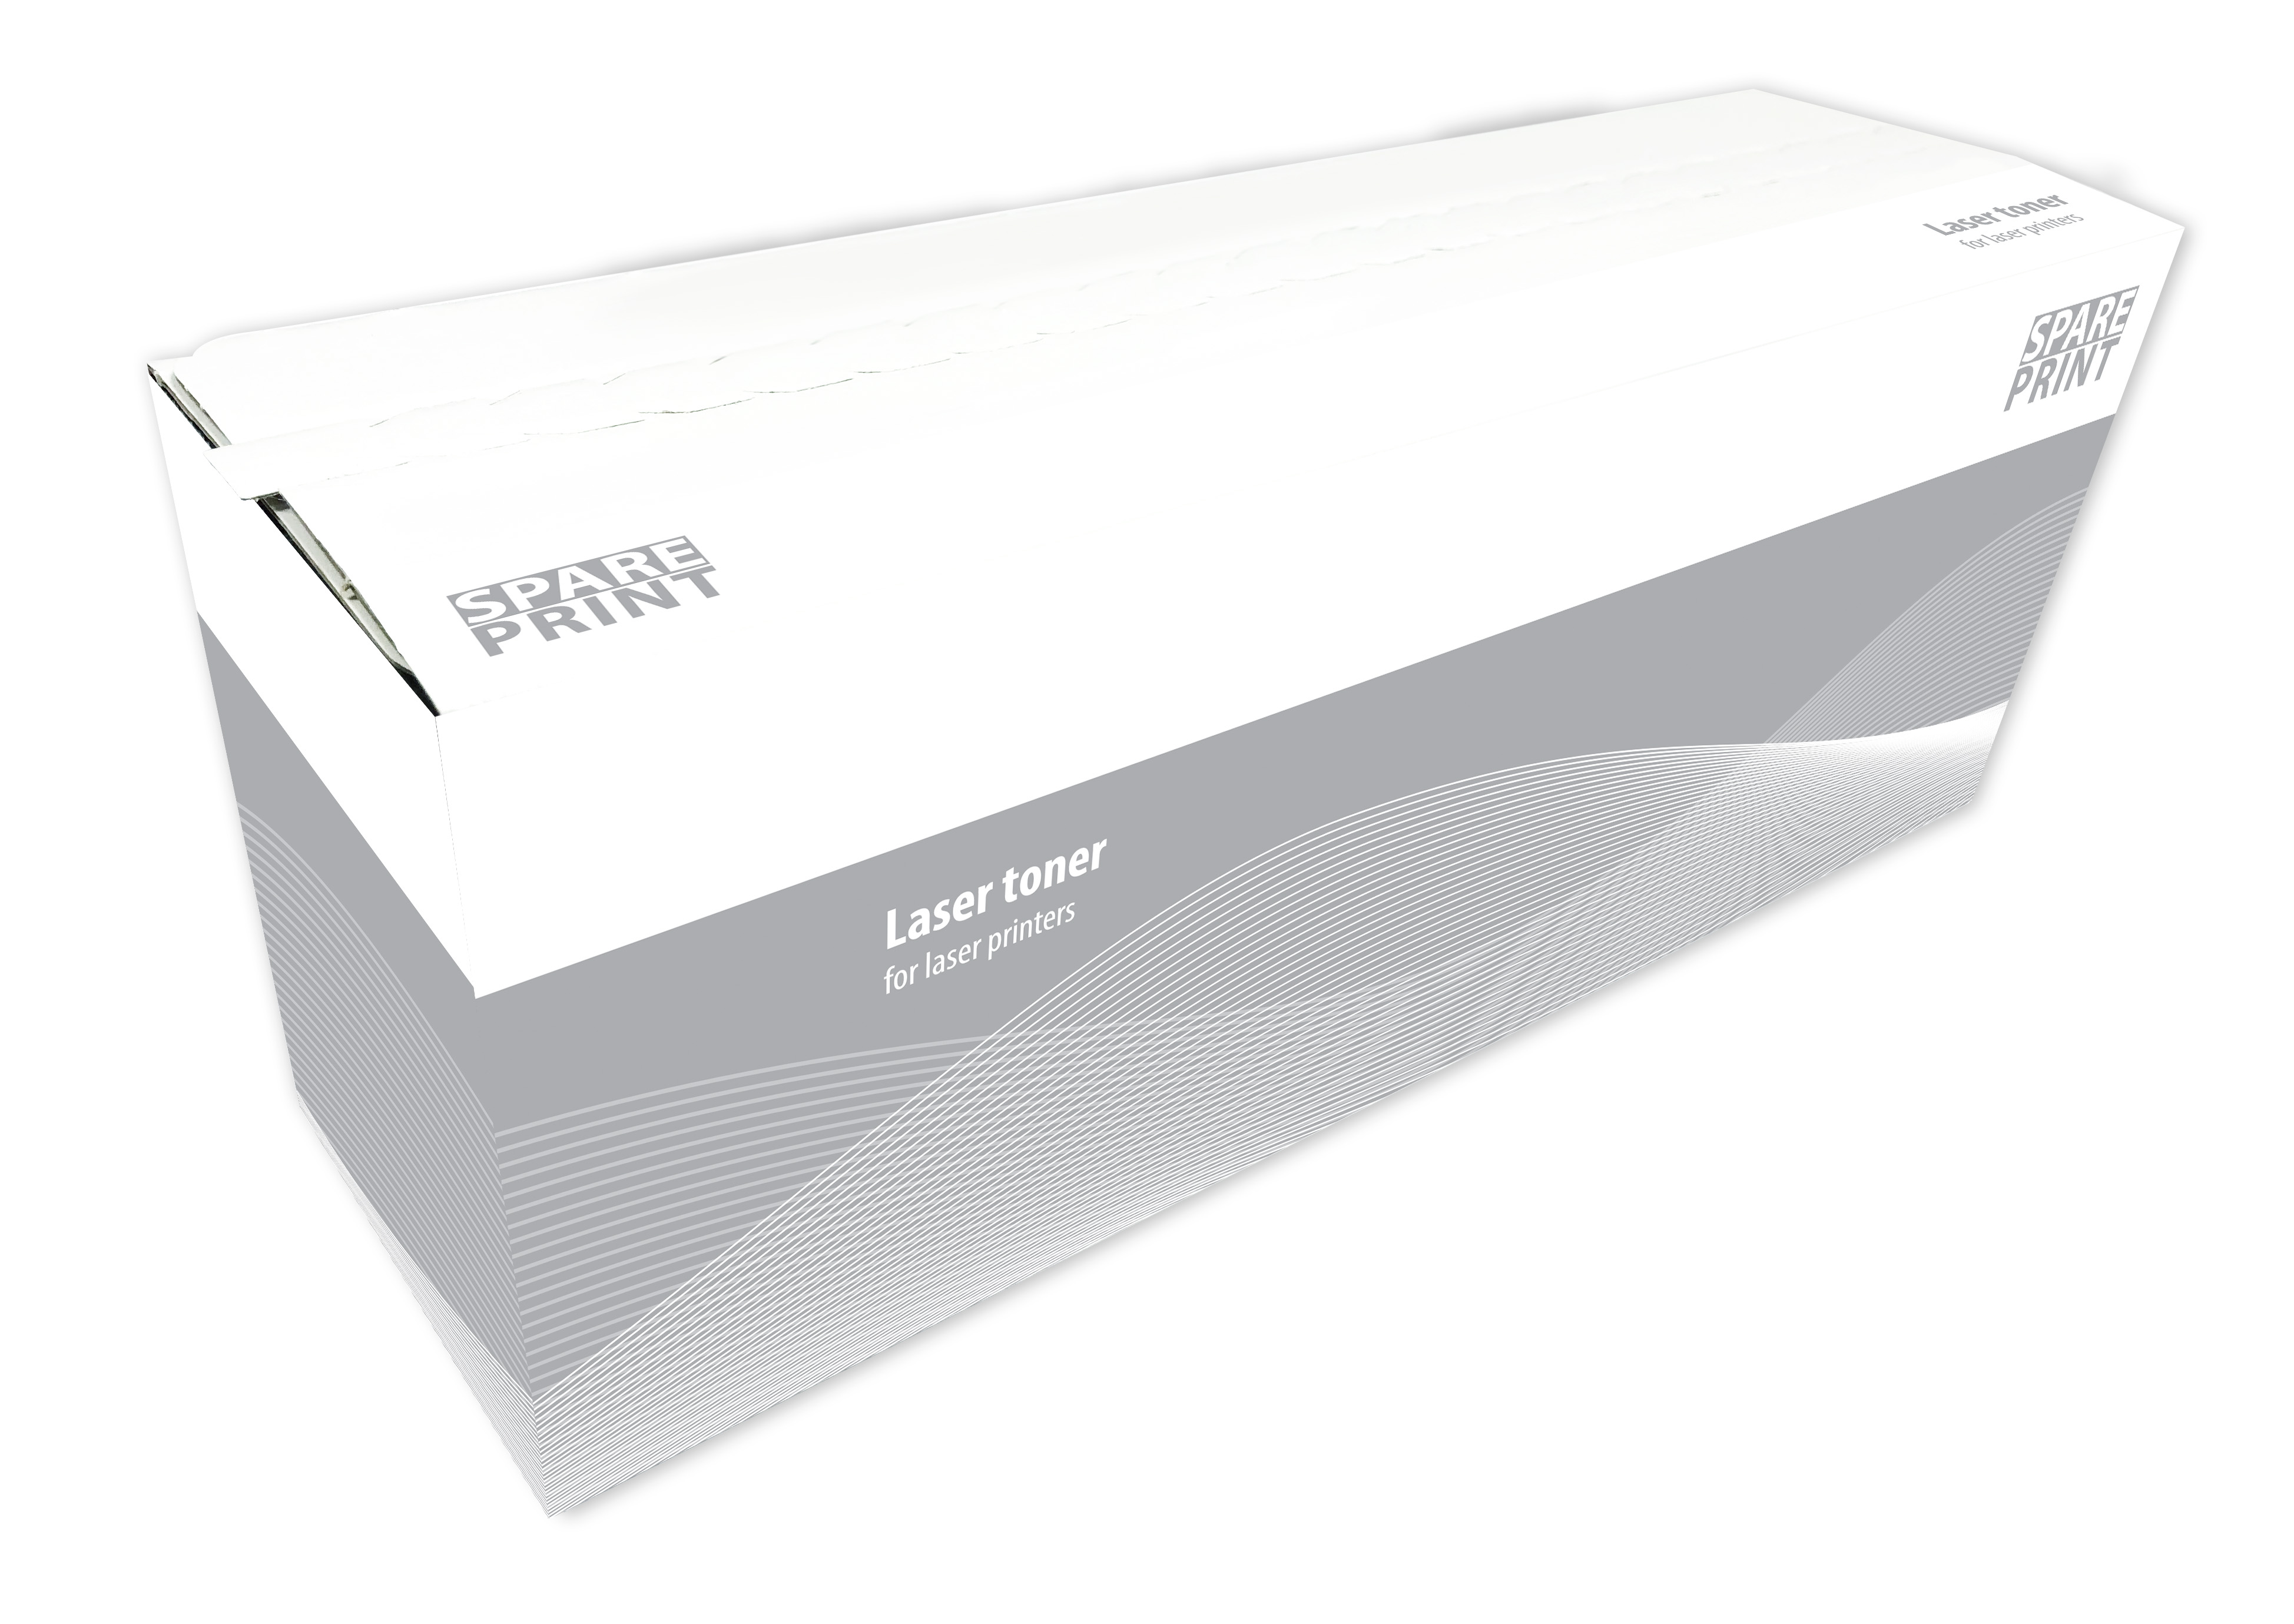 SPARE PRINT kompatibilní toner 71B20M0 Magenta pro tiskárny Lexmark